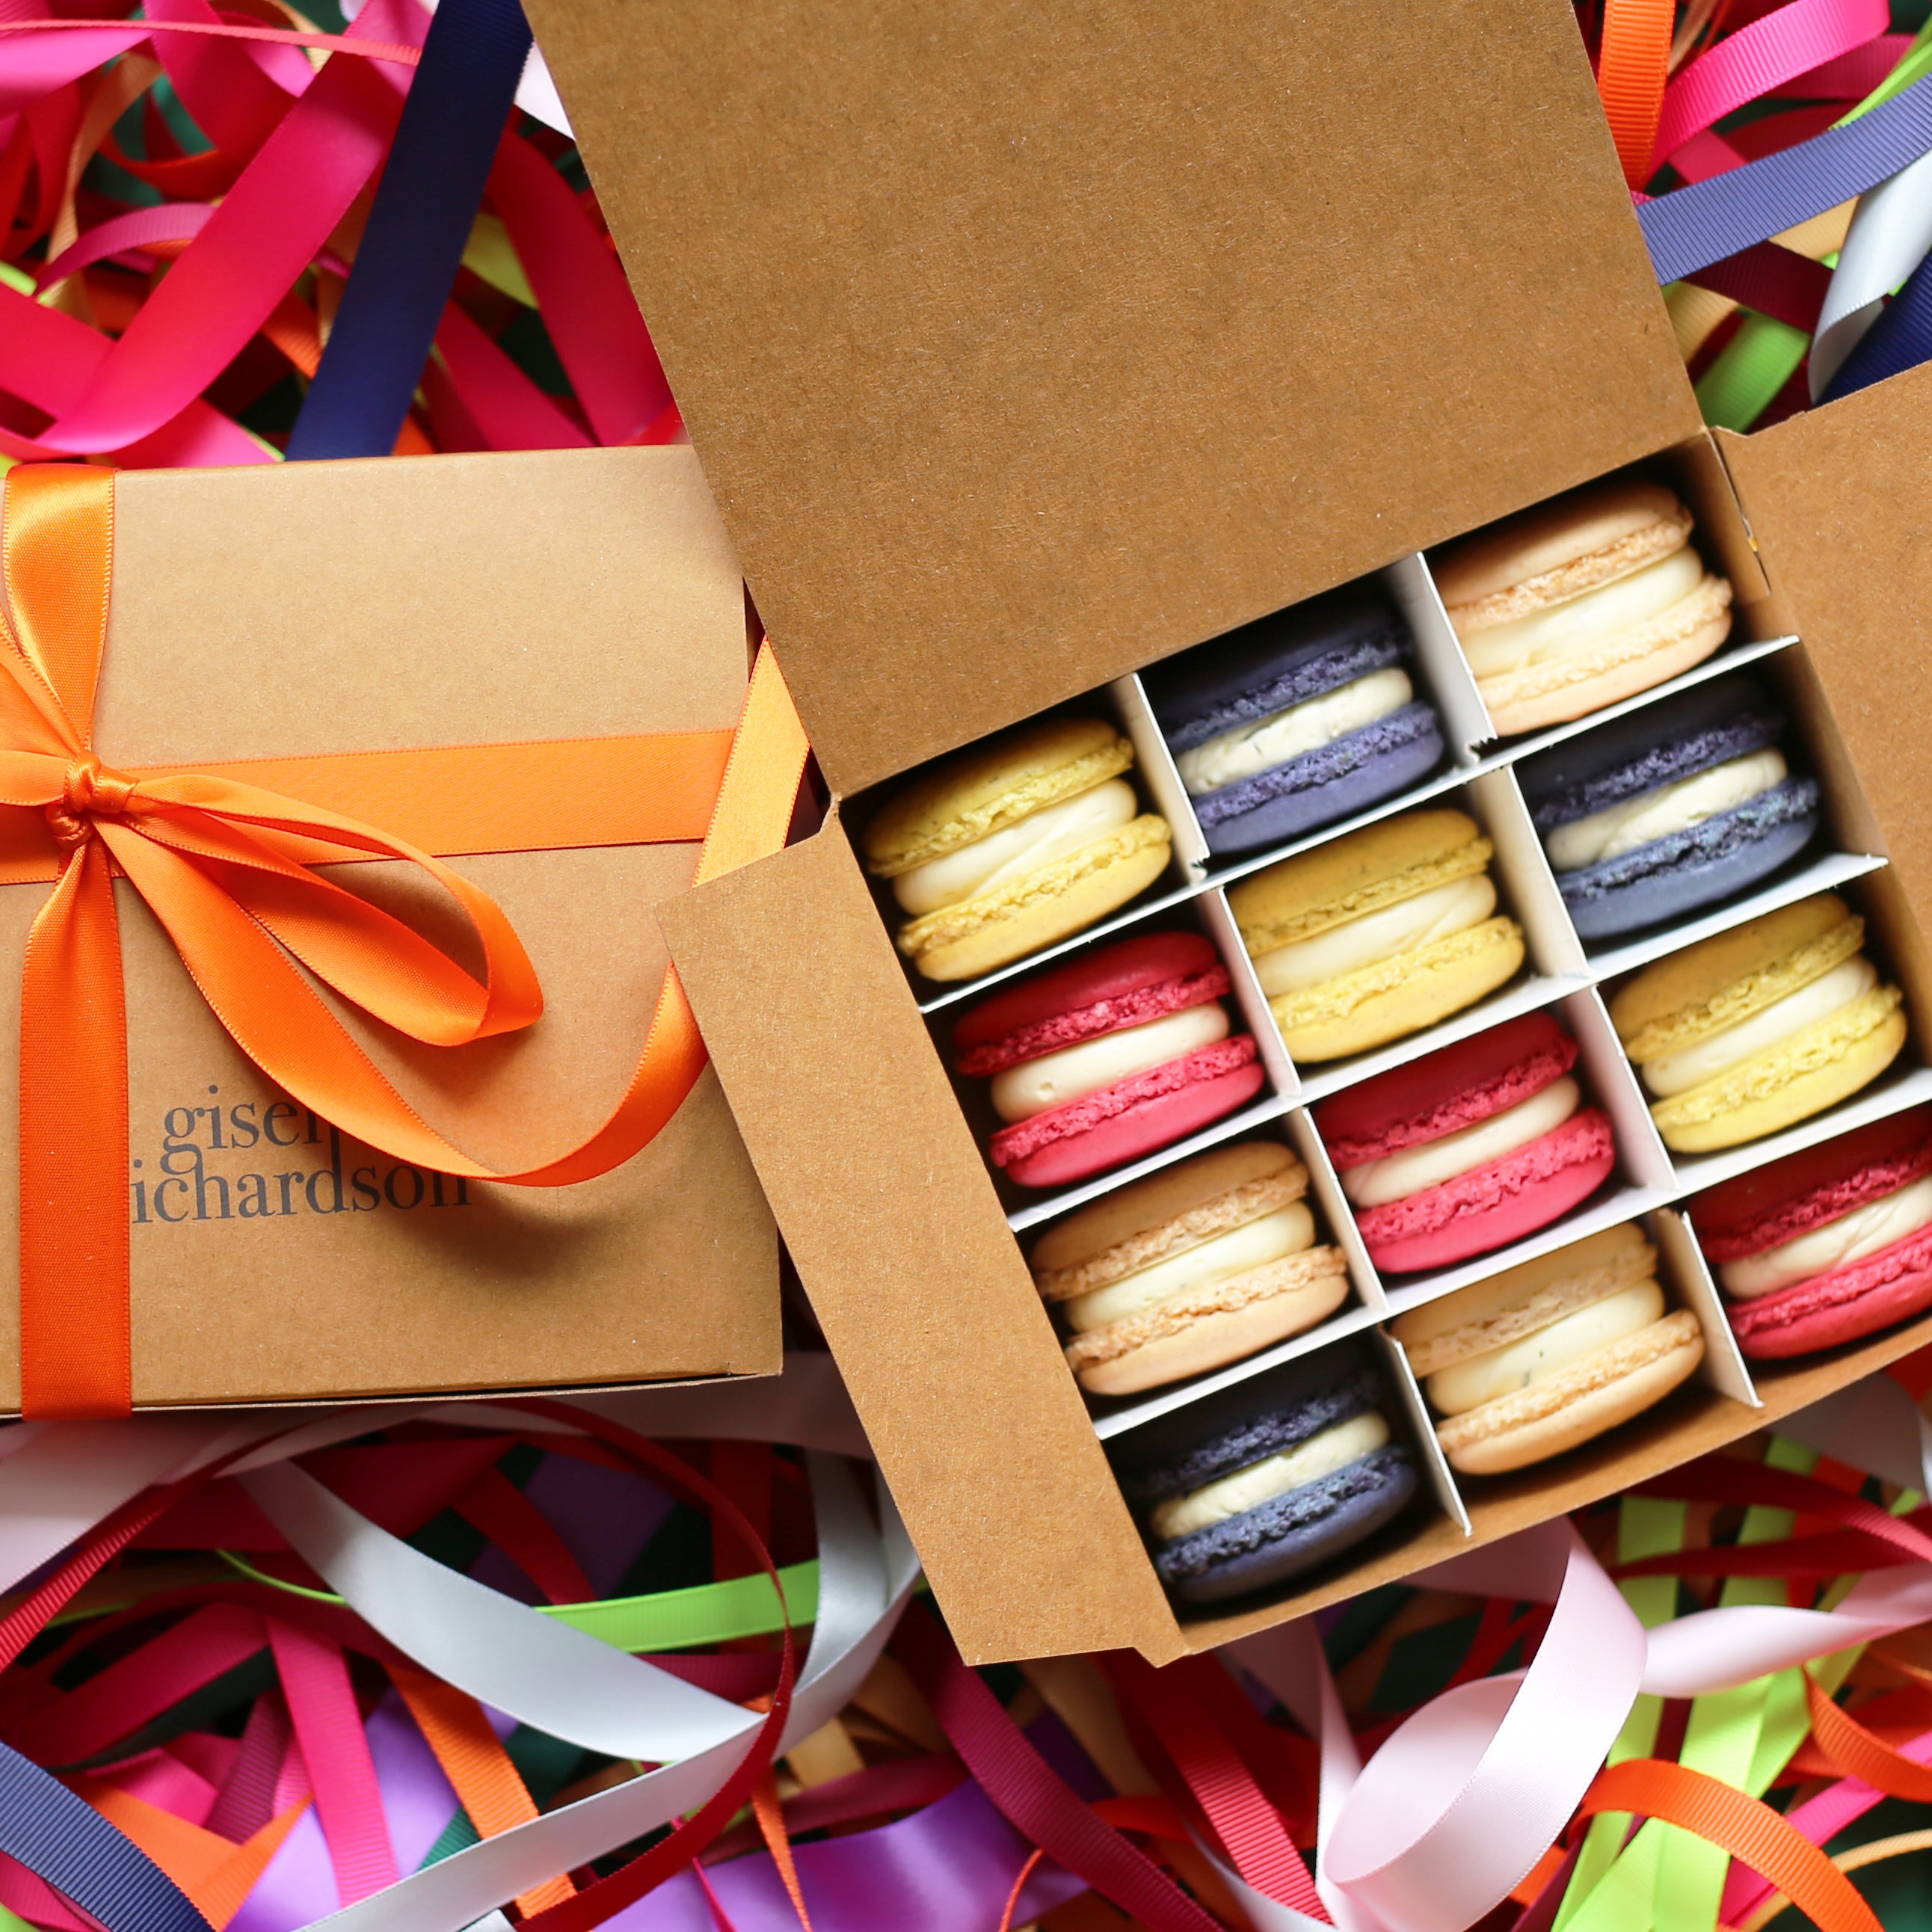 The Blossom Macaron Gift Box